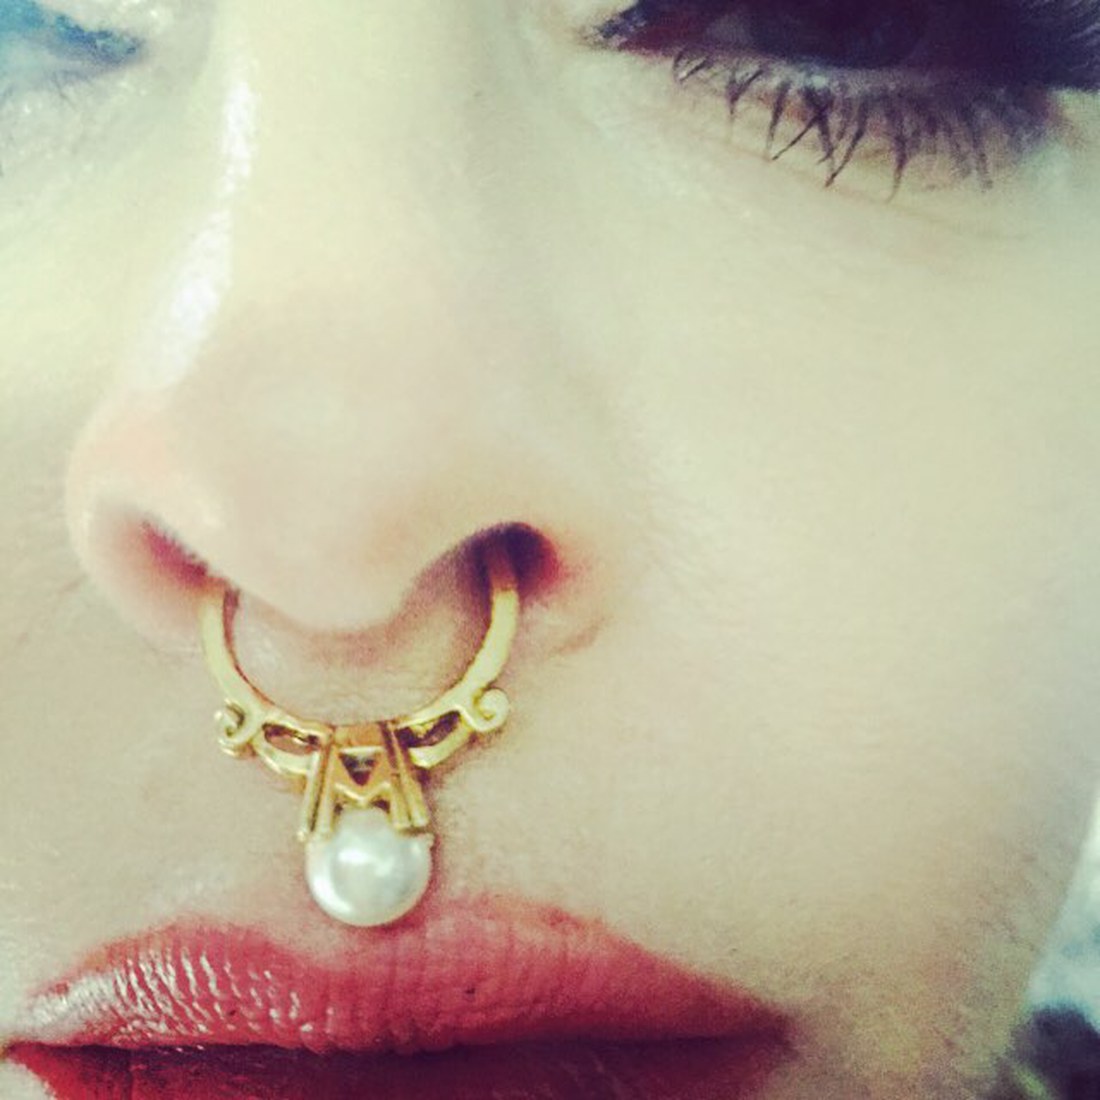 56-летняя поп-королева Мадонна проколола себе нос, как у дочери